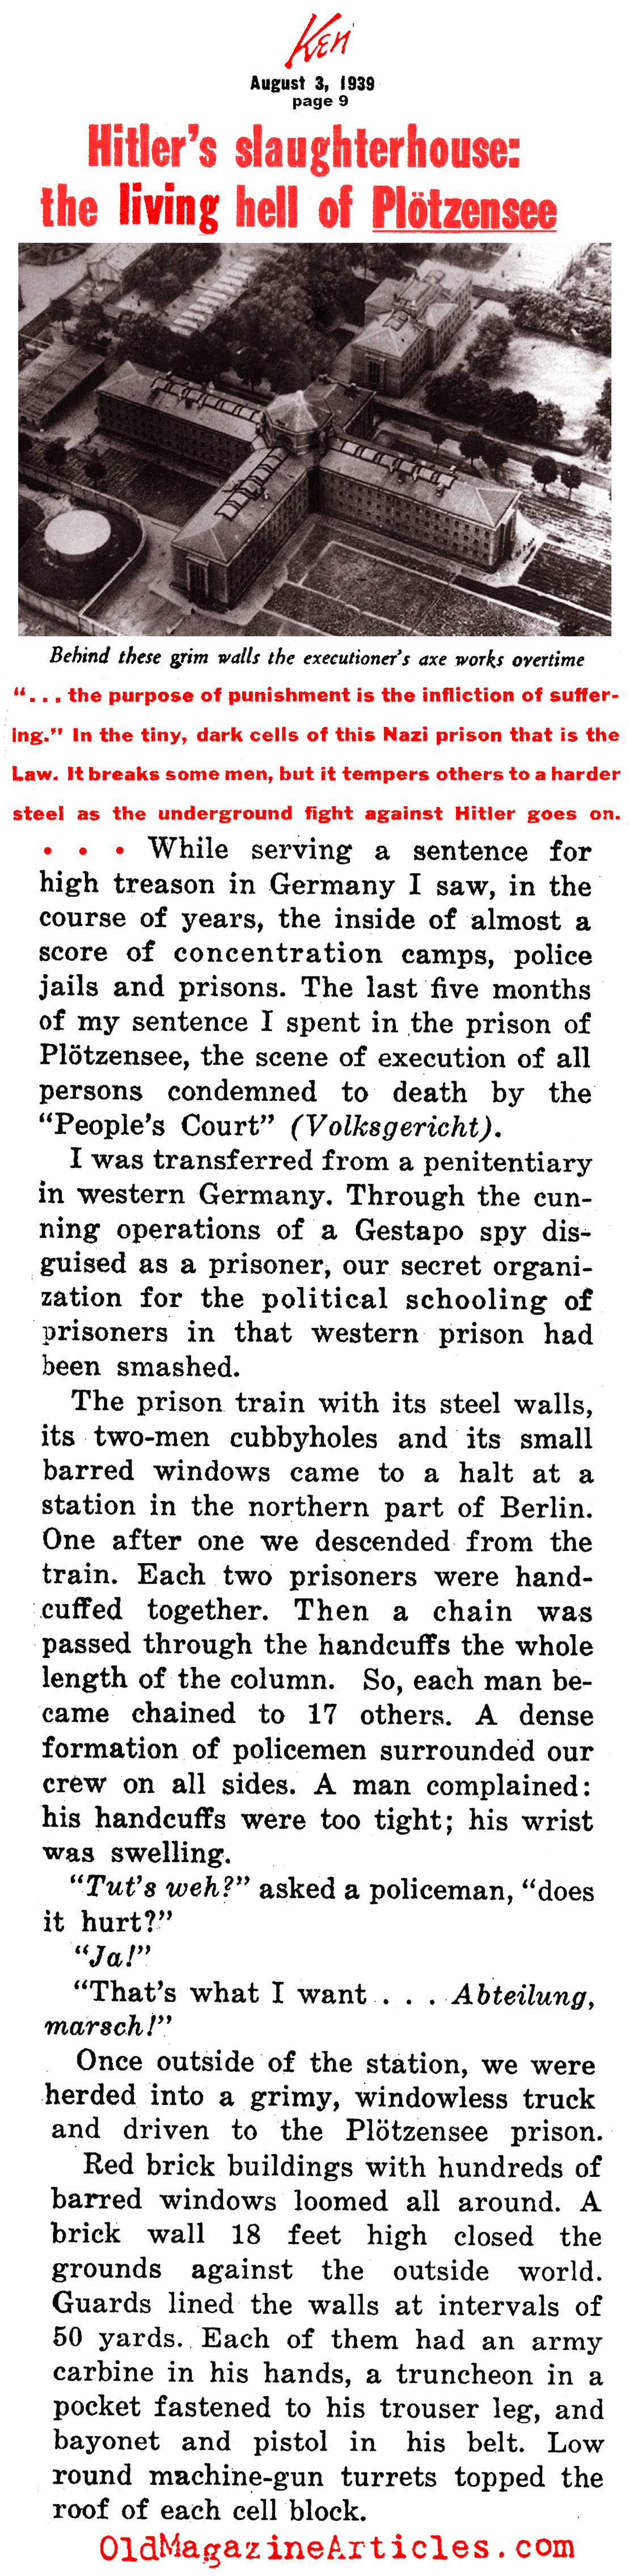 Nazi Terror at Plotzensee Prison  (Ken Magazine, 1939)